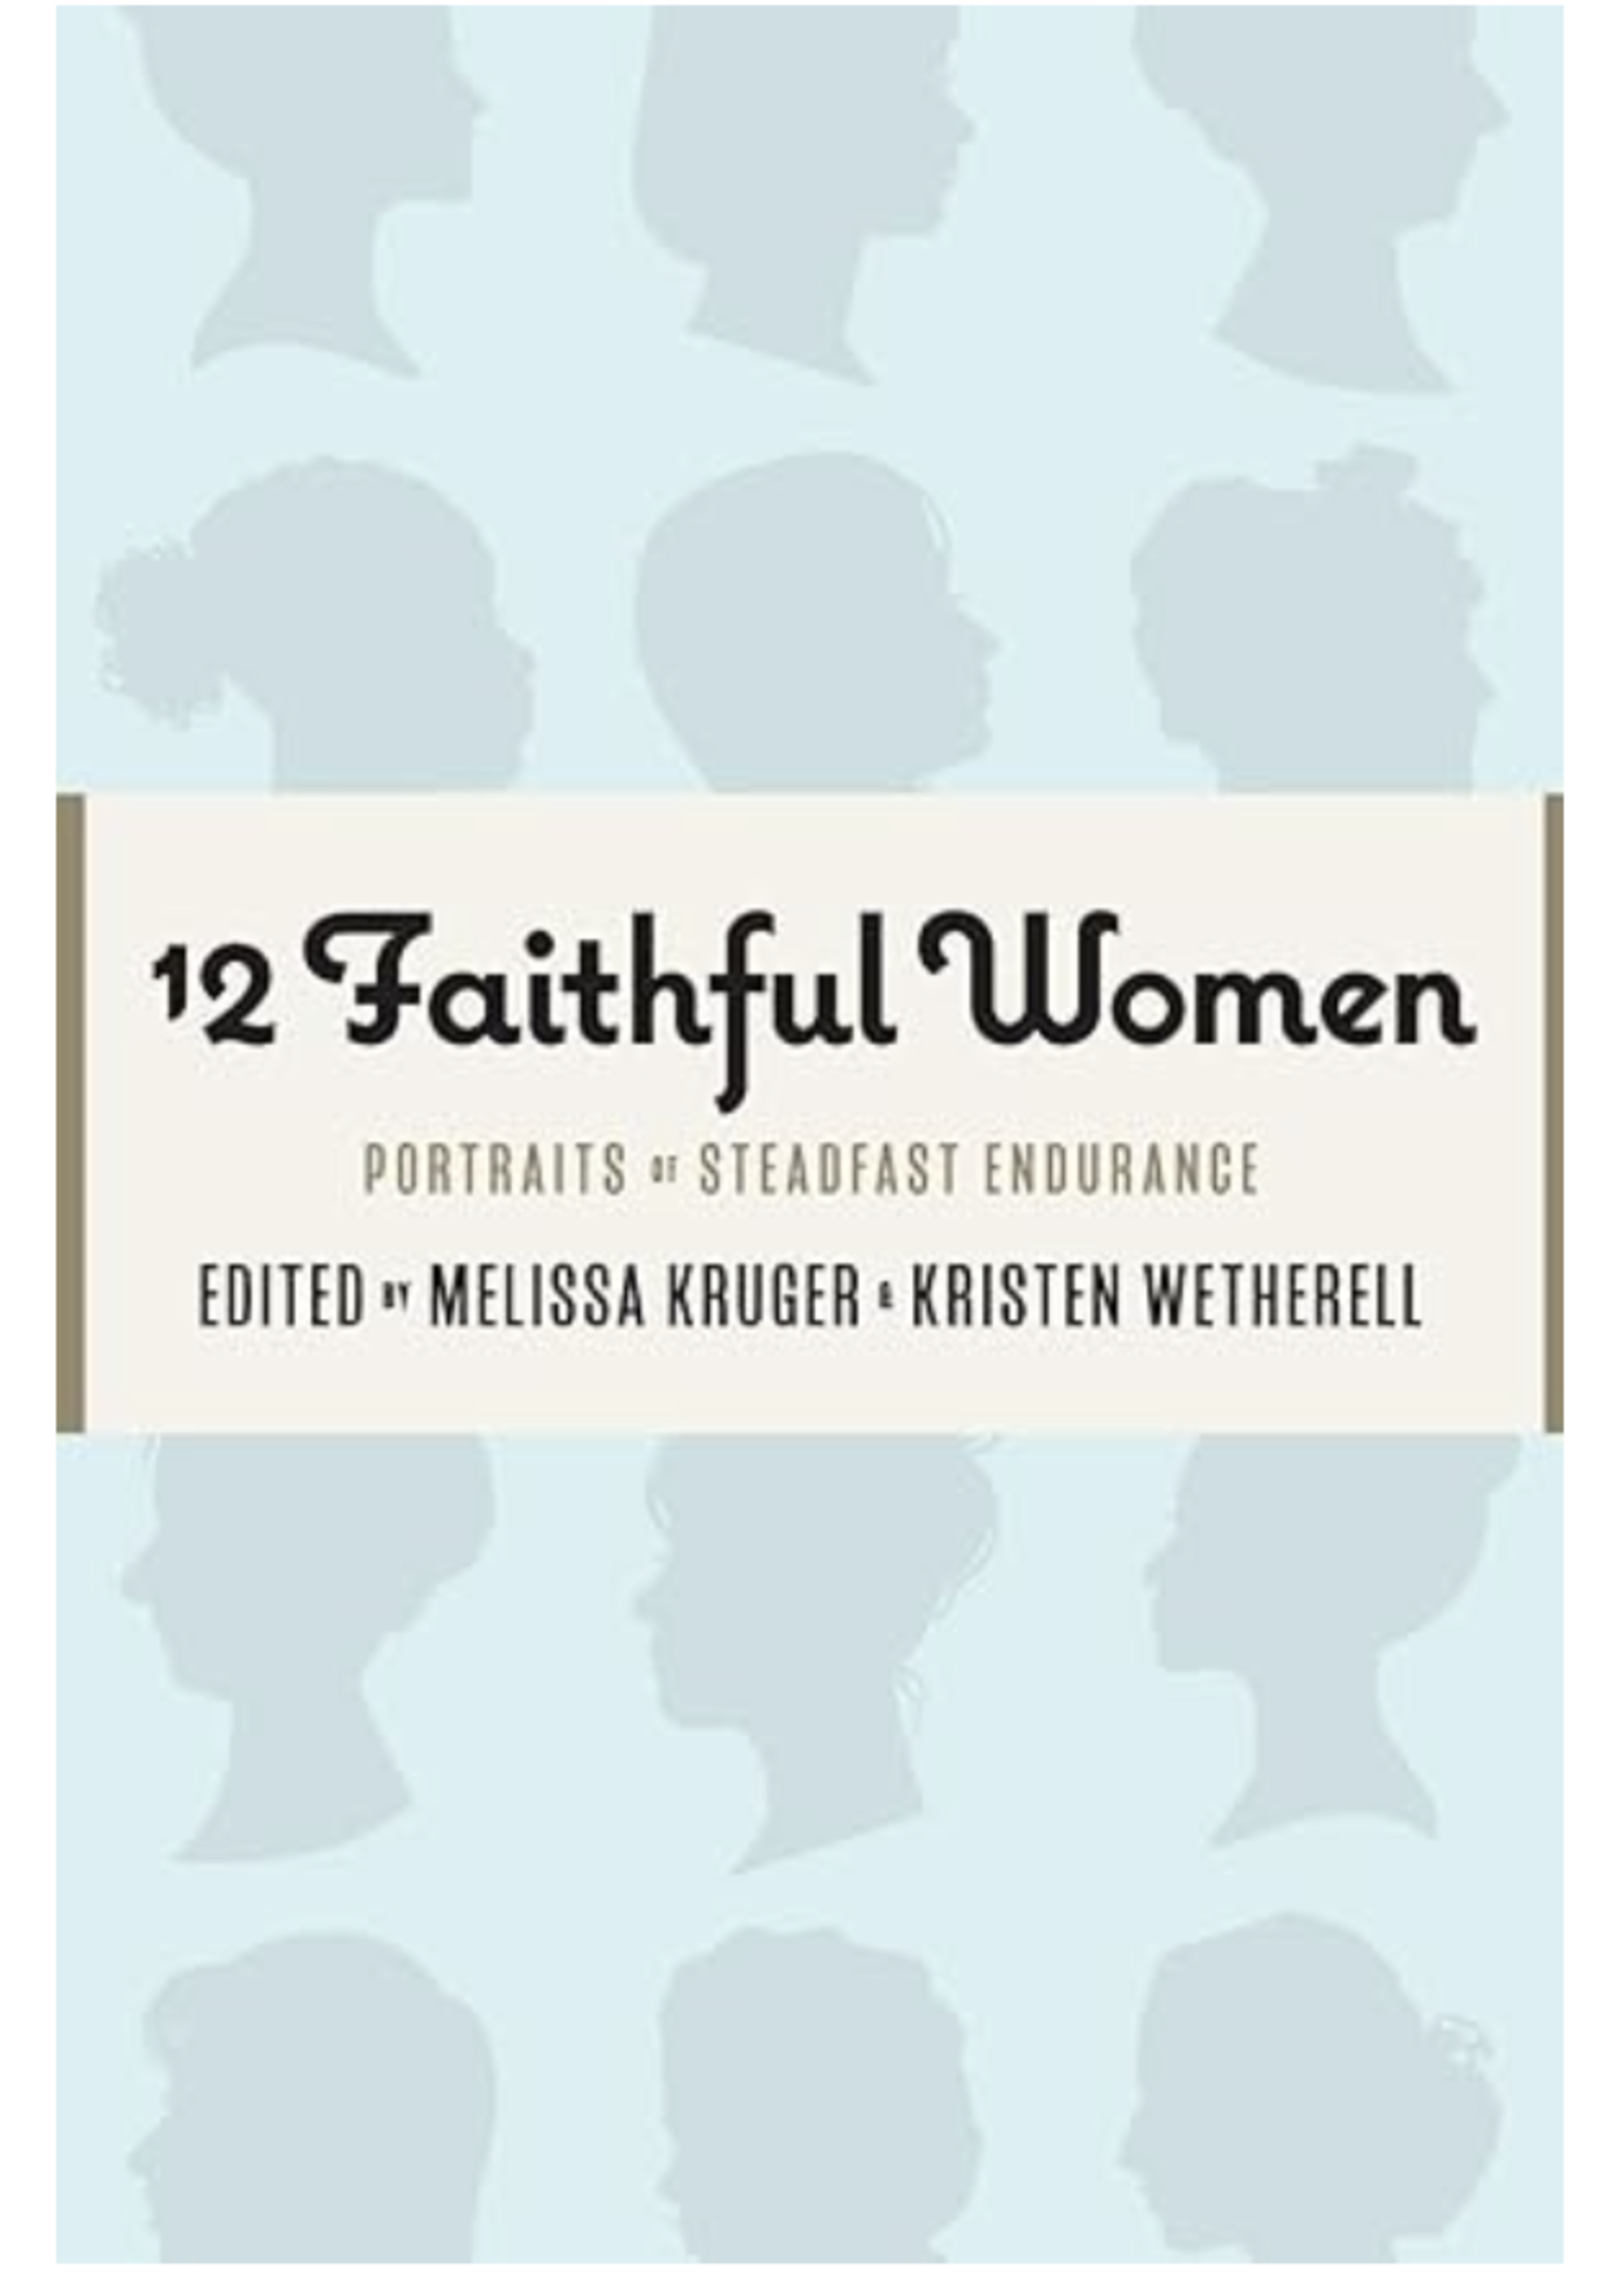 12 Faithful Women: Portraits of Steadfast Endurance [Melissa Kruger & Kristen Wetherell]